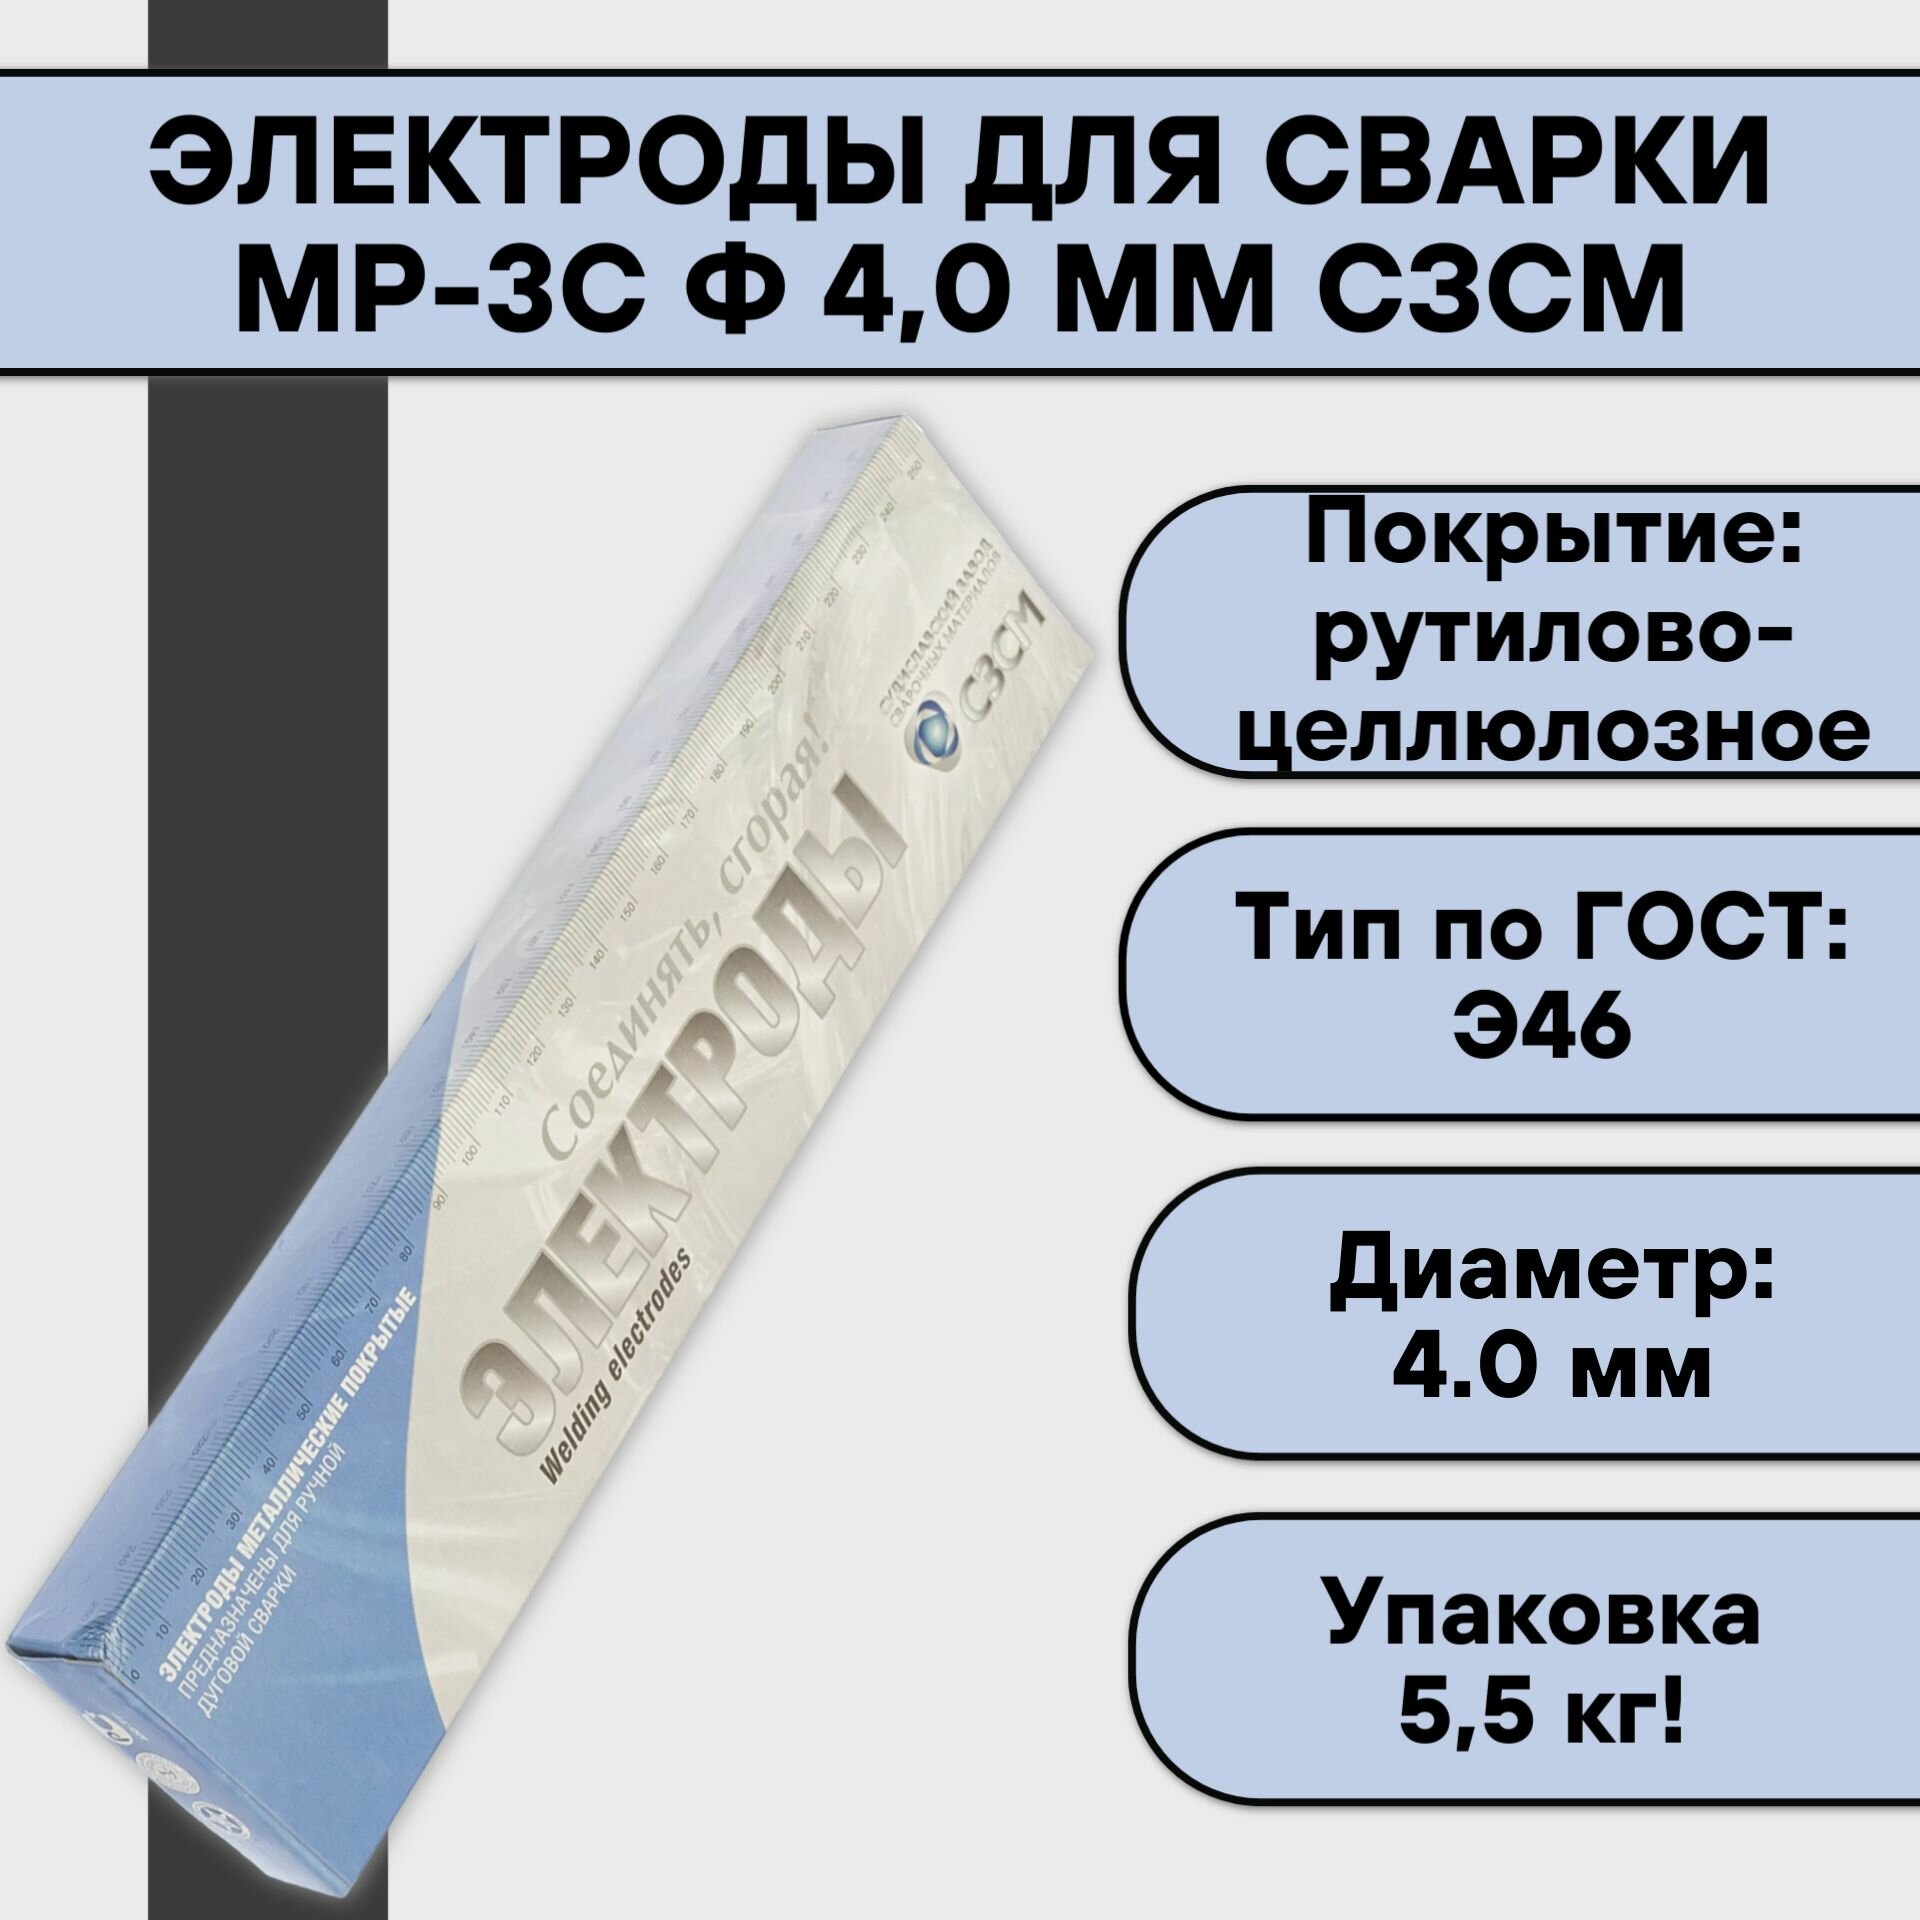 Электроды для сварки МР-3С ф 4,0 мм (5,5 кг) сзсм